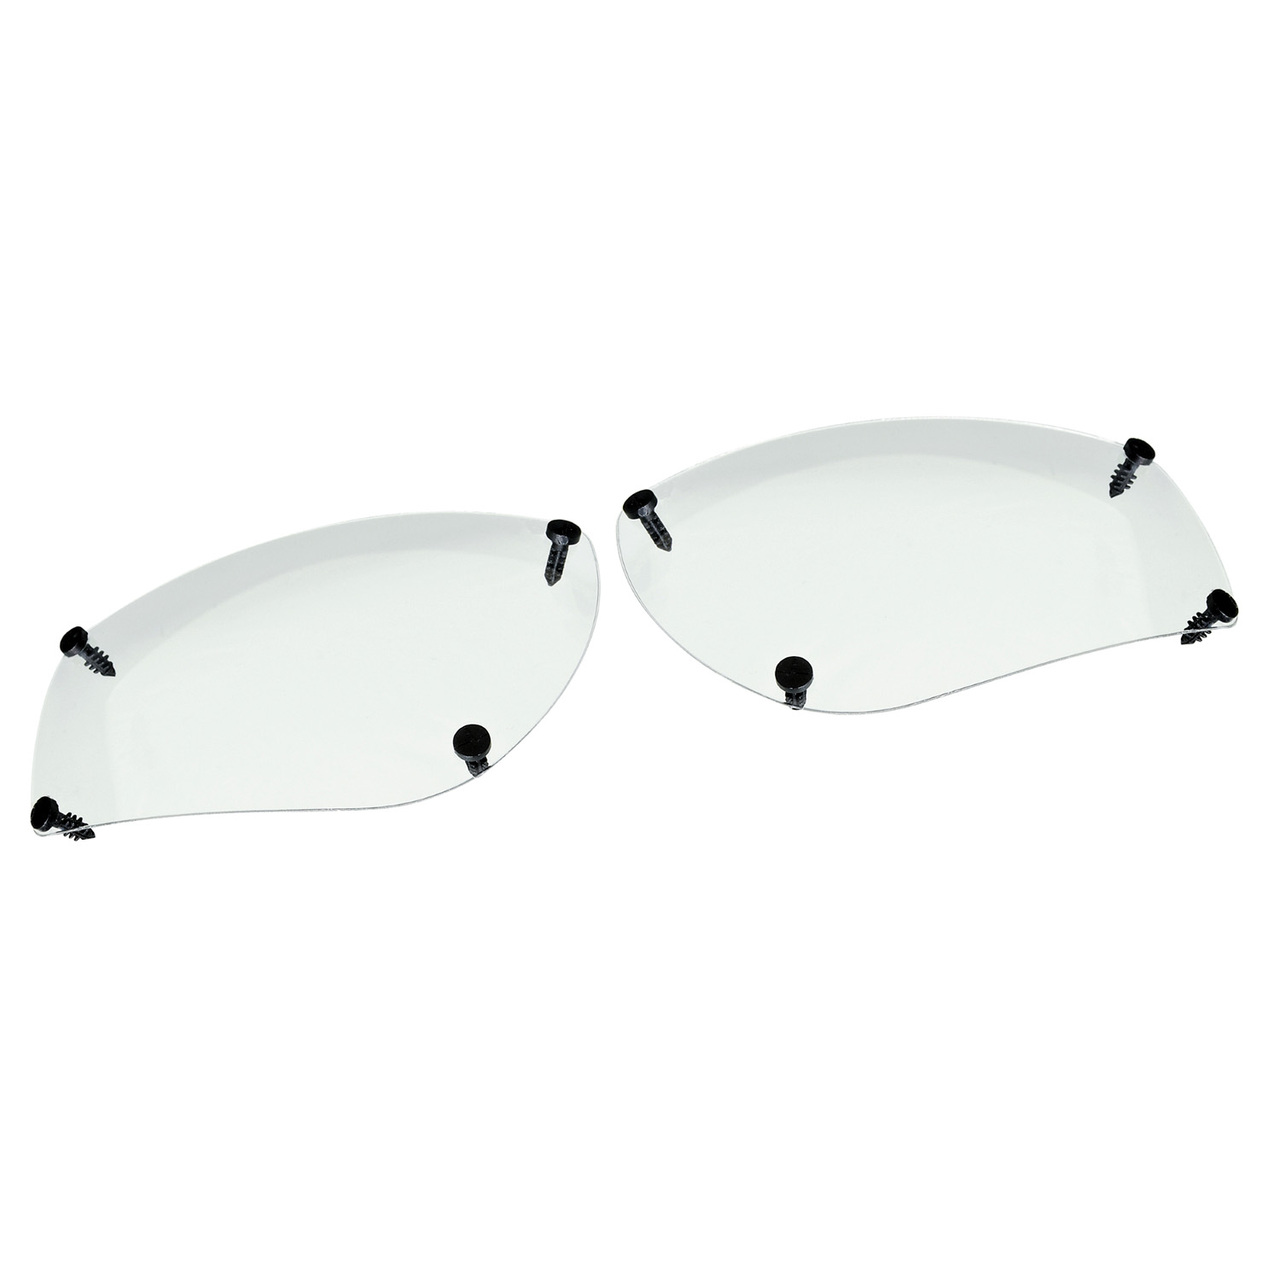 Amphibious kjørebrille linse UV/polarisert klart glass